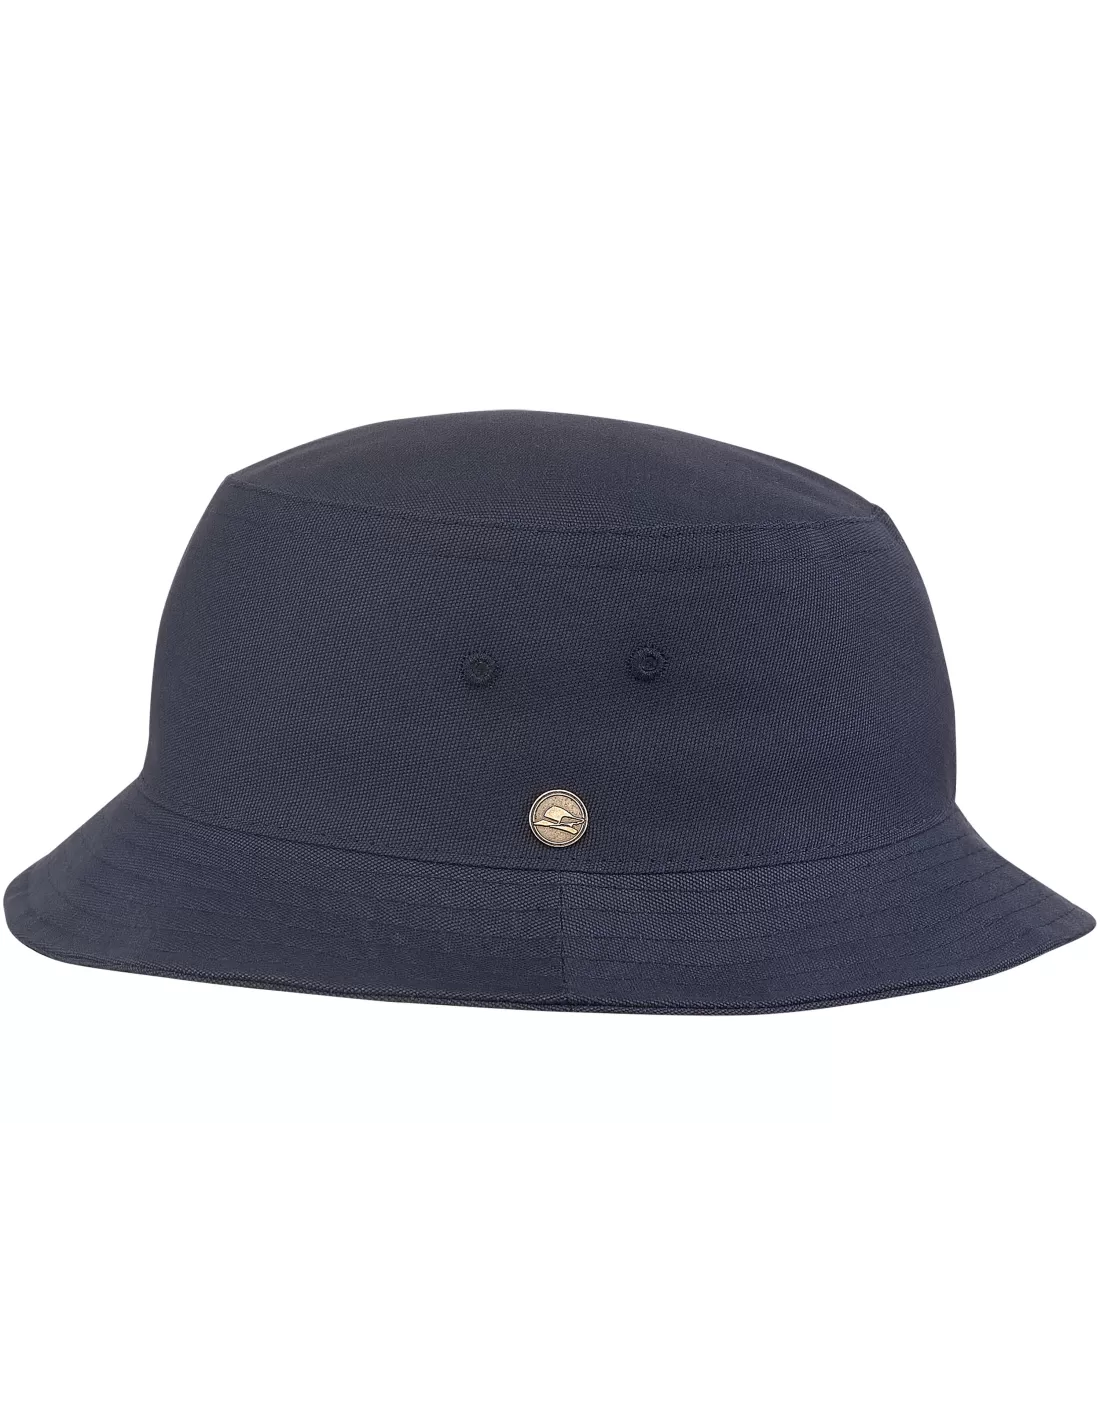 Hats - Golf - Cotton 56 cm Navy Blue